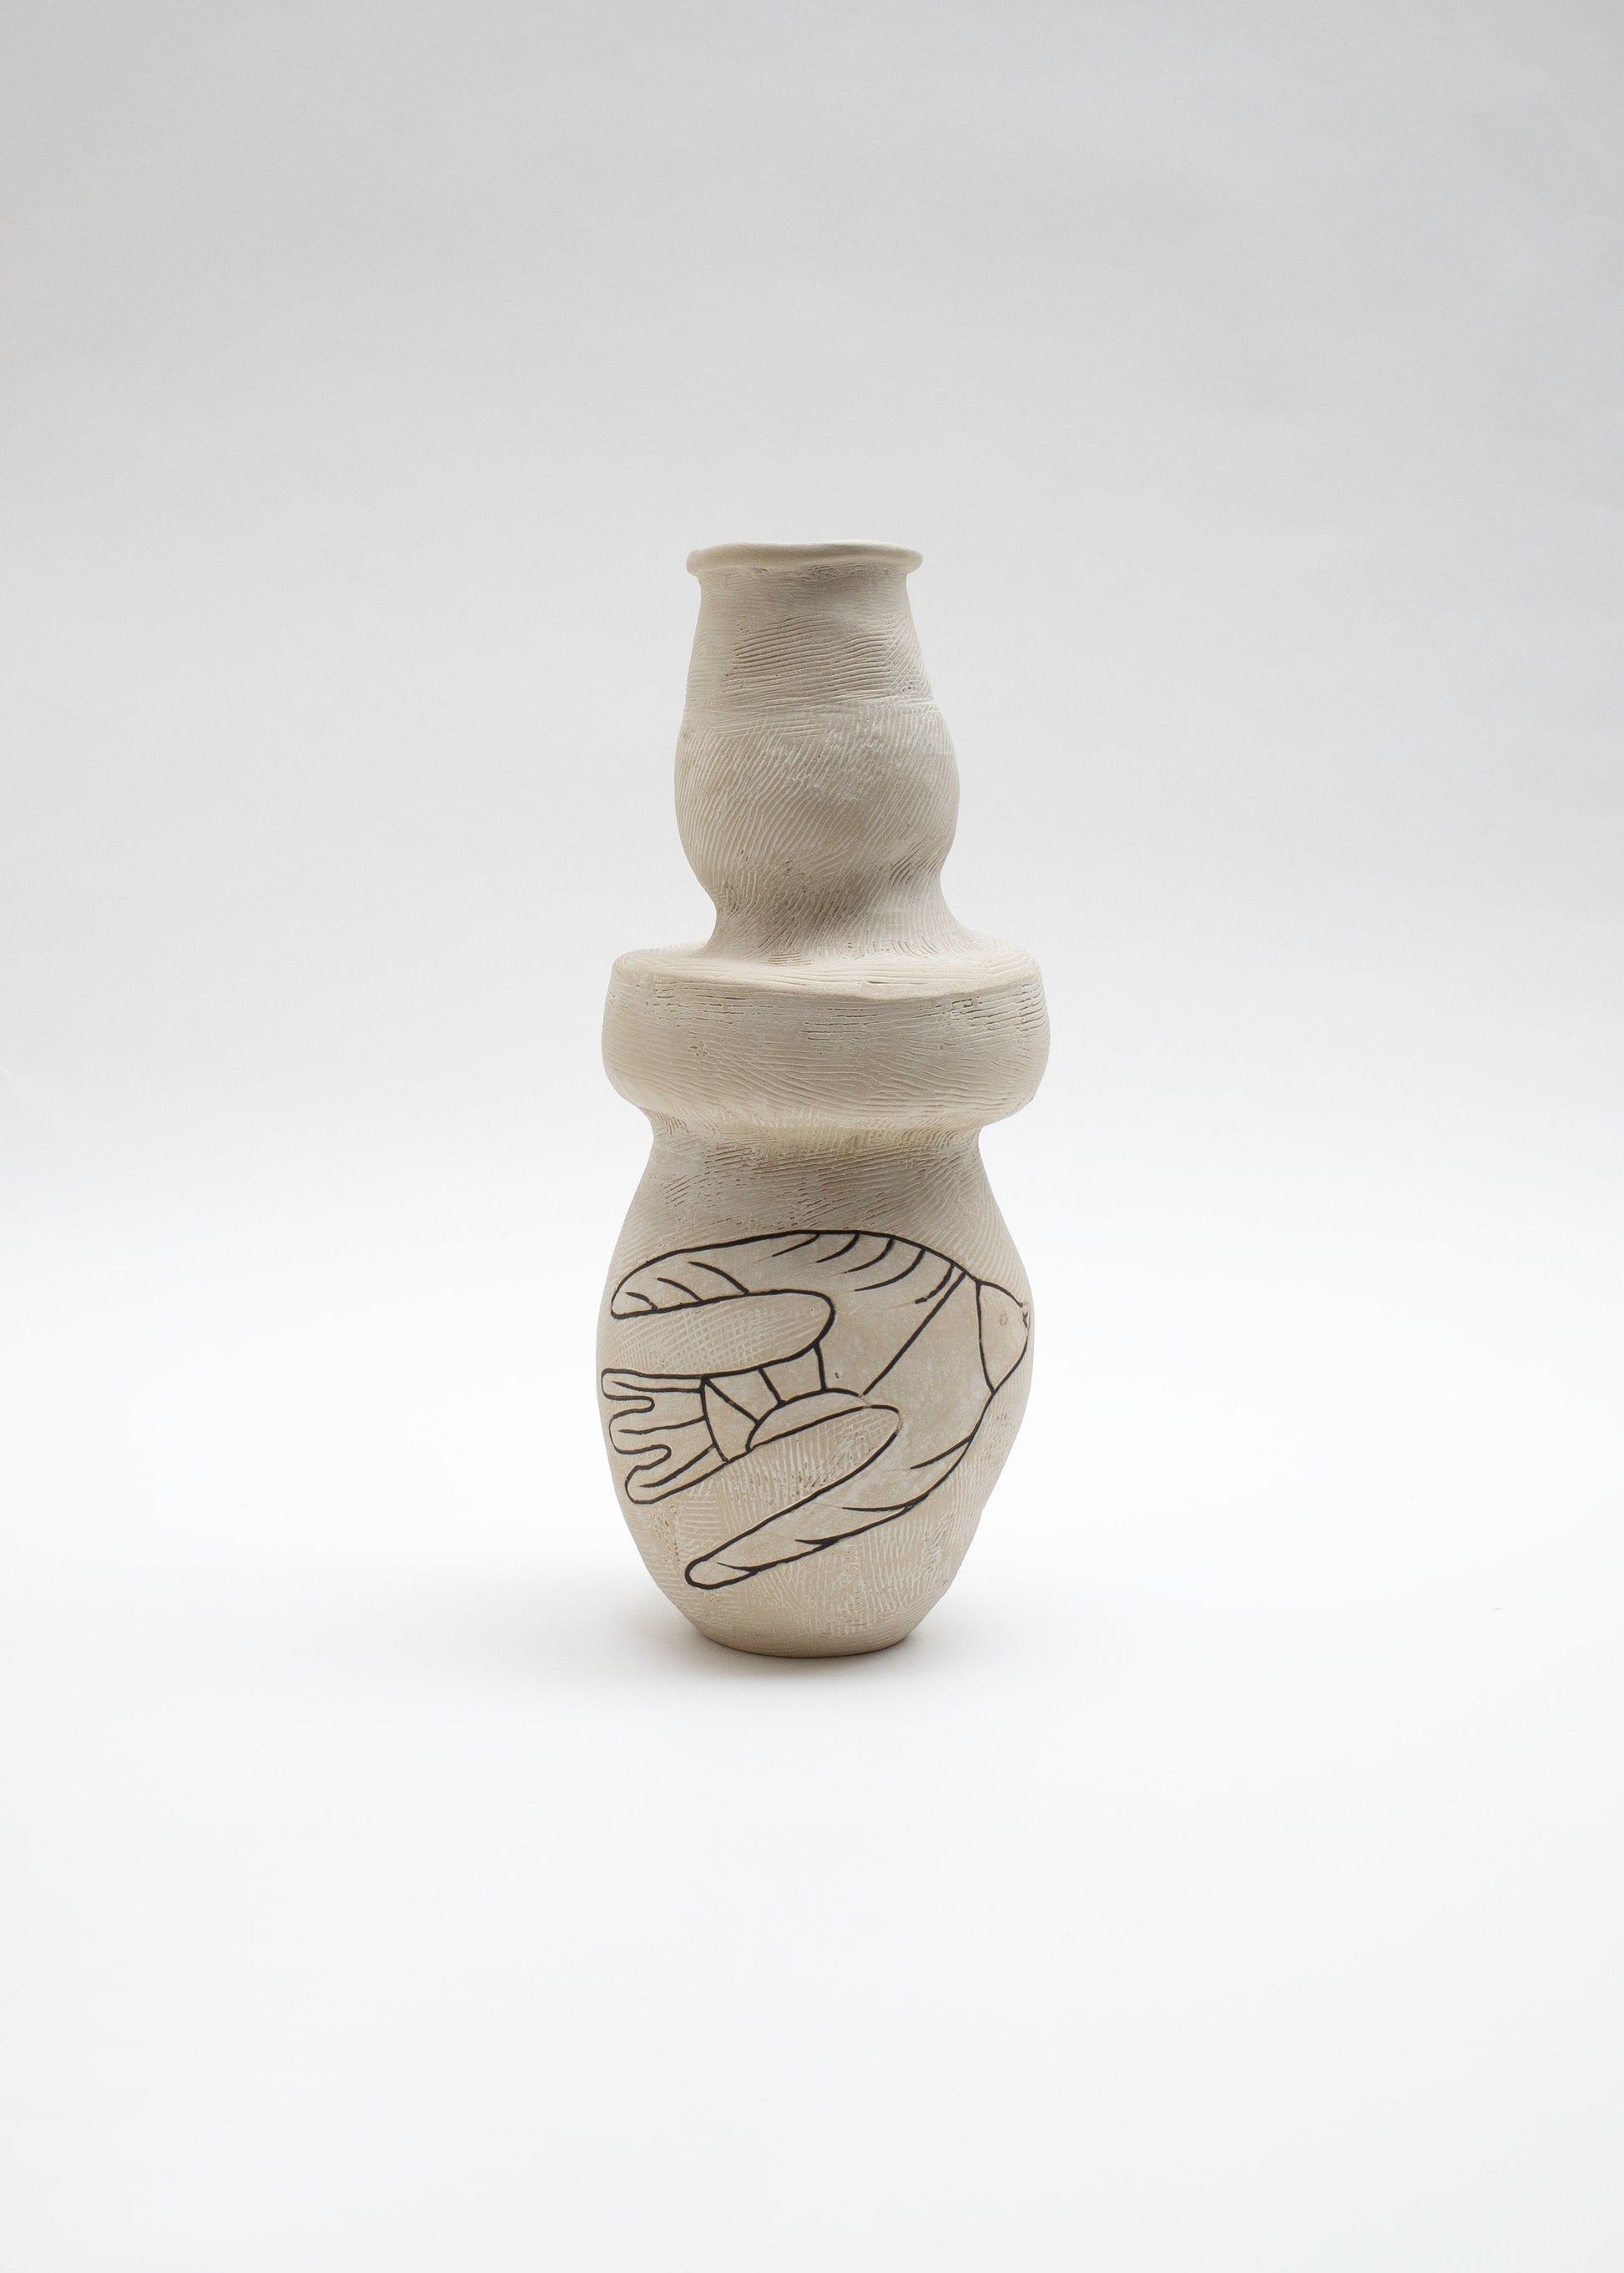 Kuro No. 4 by Egle Simkus Vases